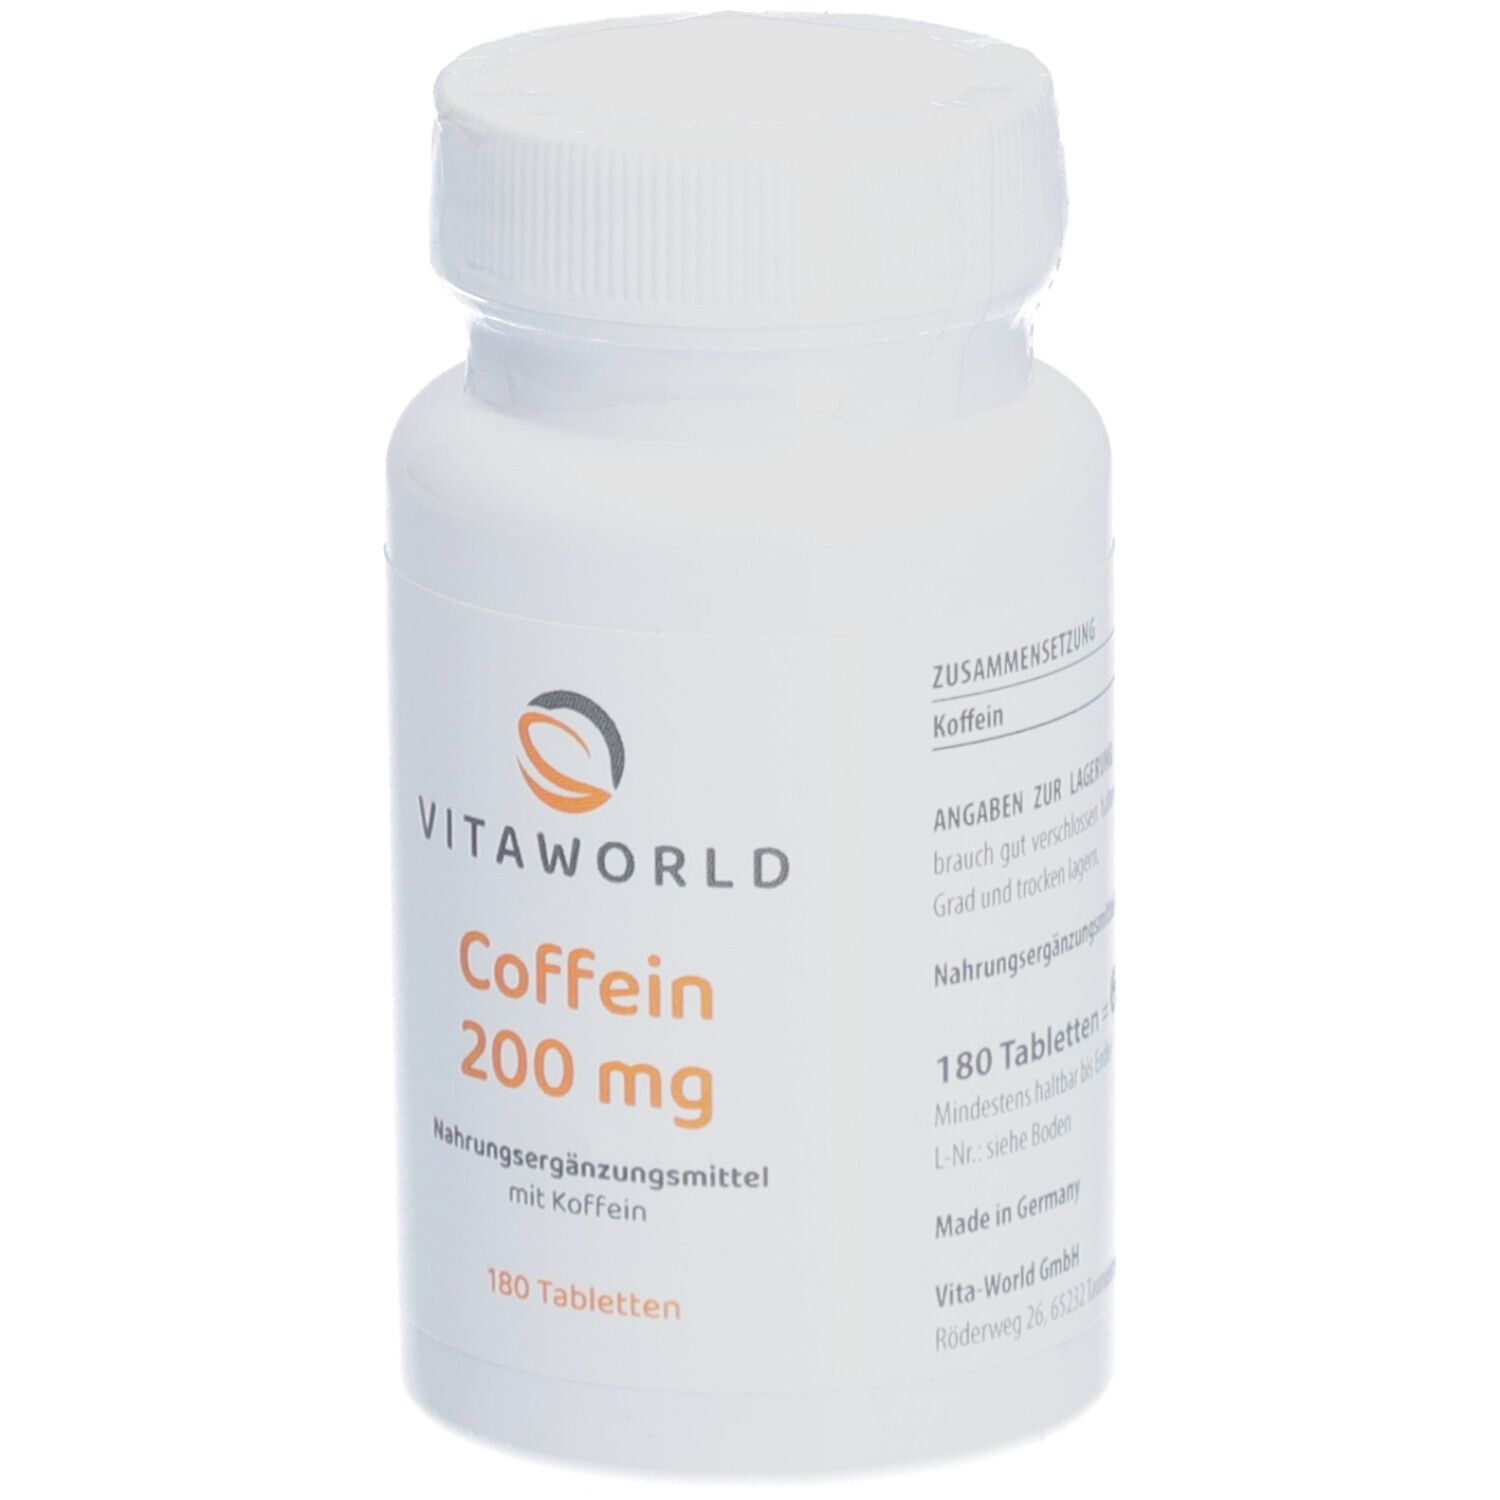 VitaWorld Coffein 200 mg